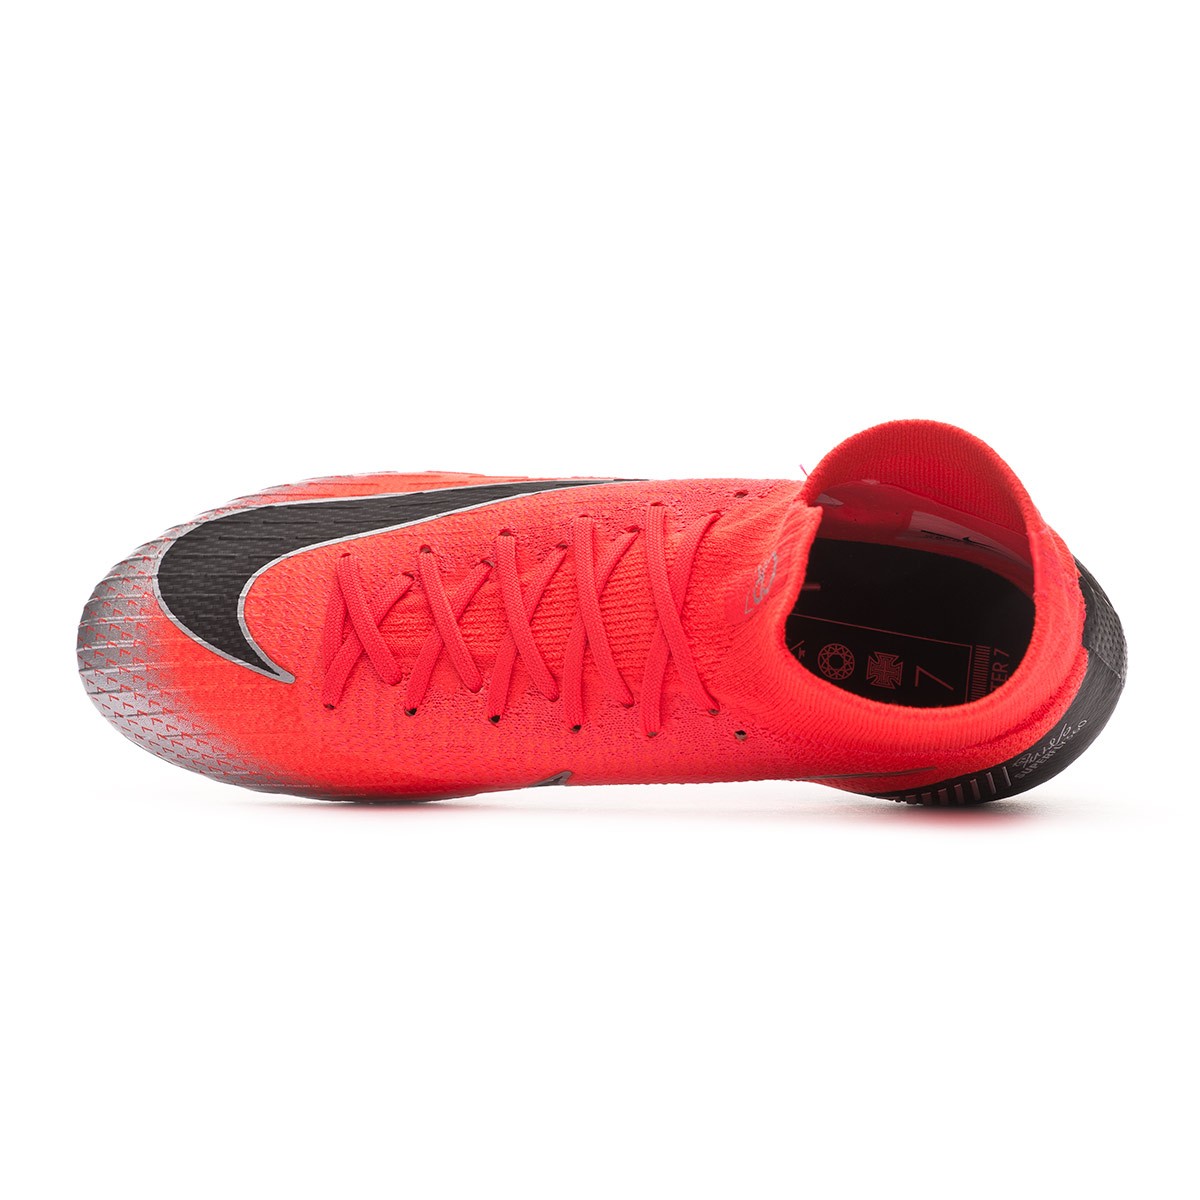 Football Boots Nike Mercurial Superfly Vi Elite Cr7 Fg Flash